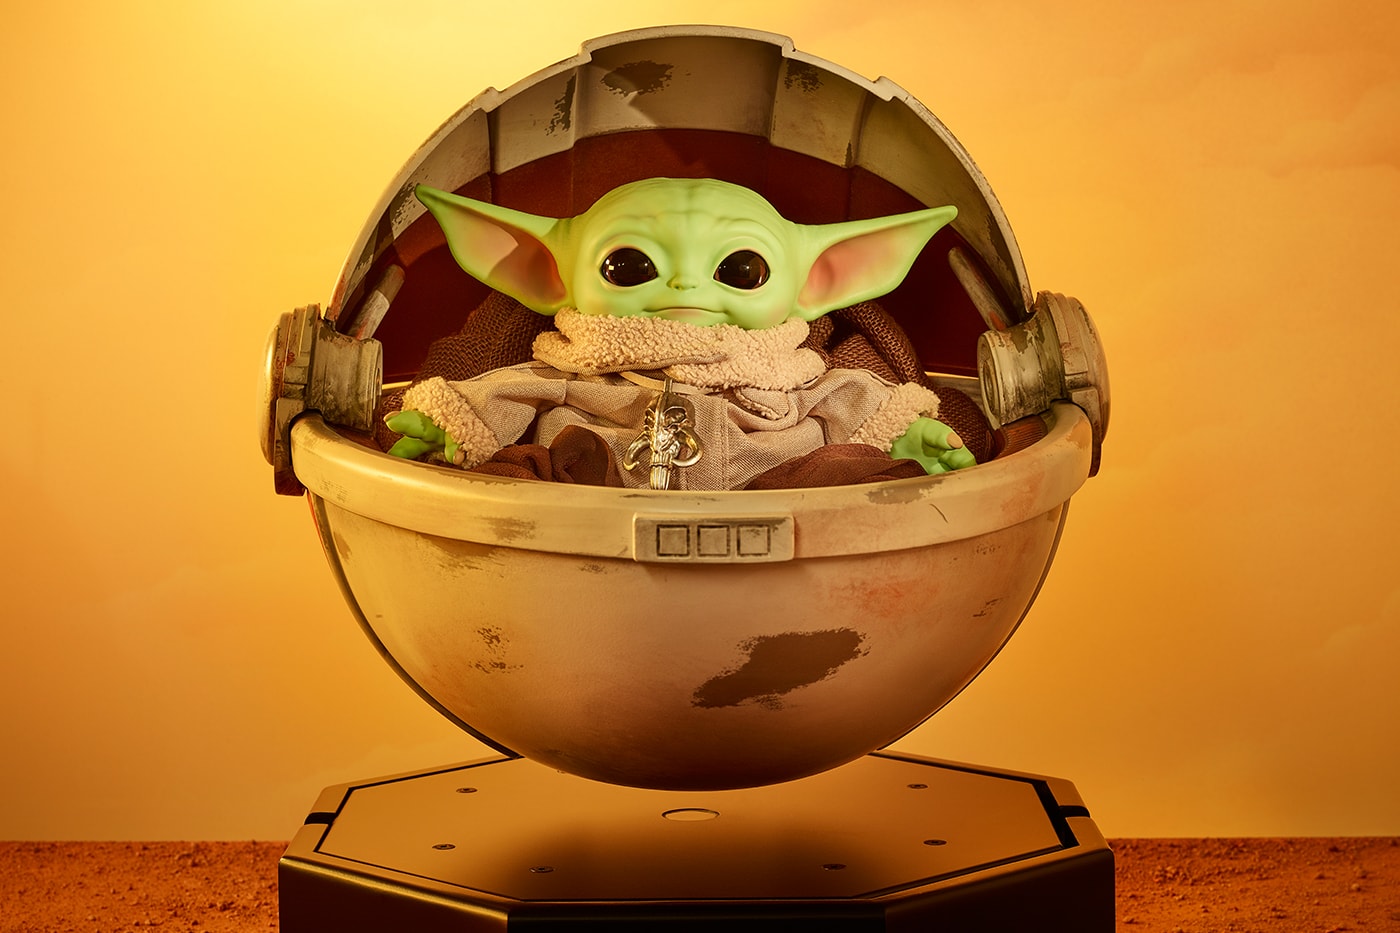 Mattel Baby Yoda Plush and Hover Pram Auction creations projectart limited edtion sale ebay charity grogu child mandalorian star wars disney price